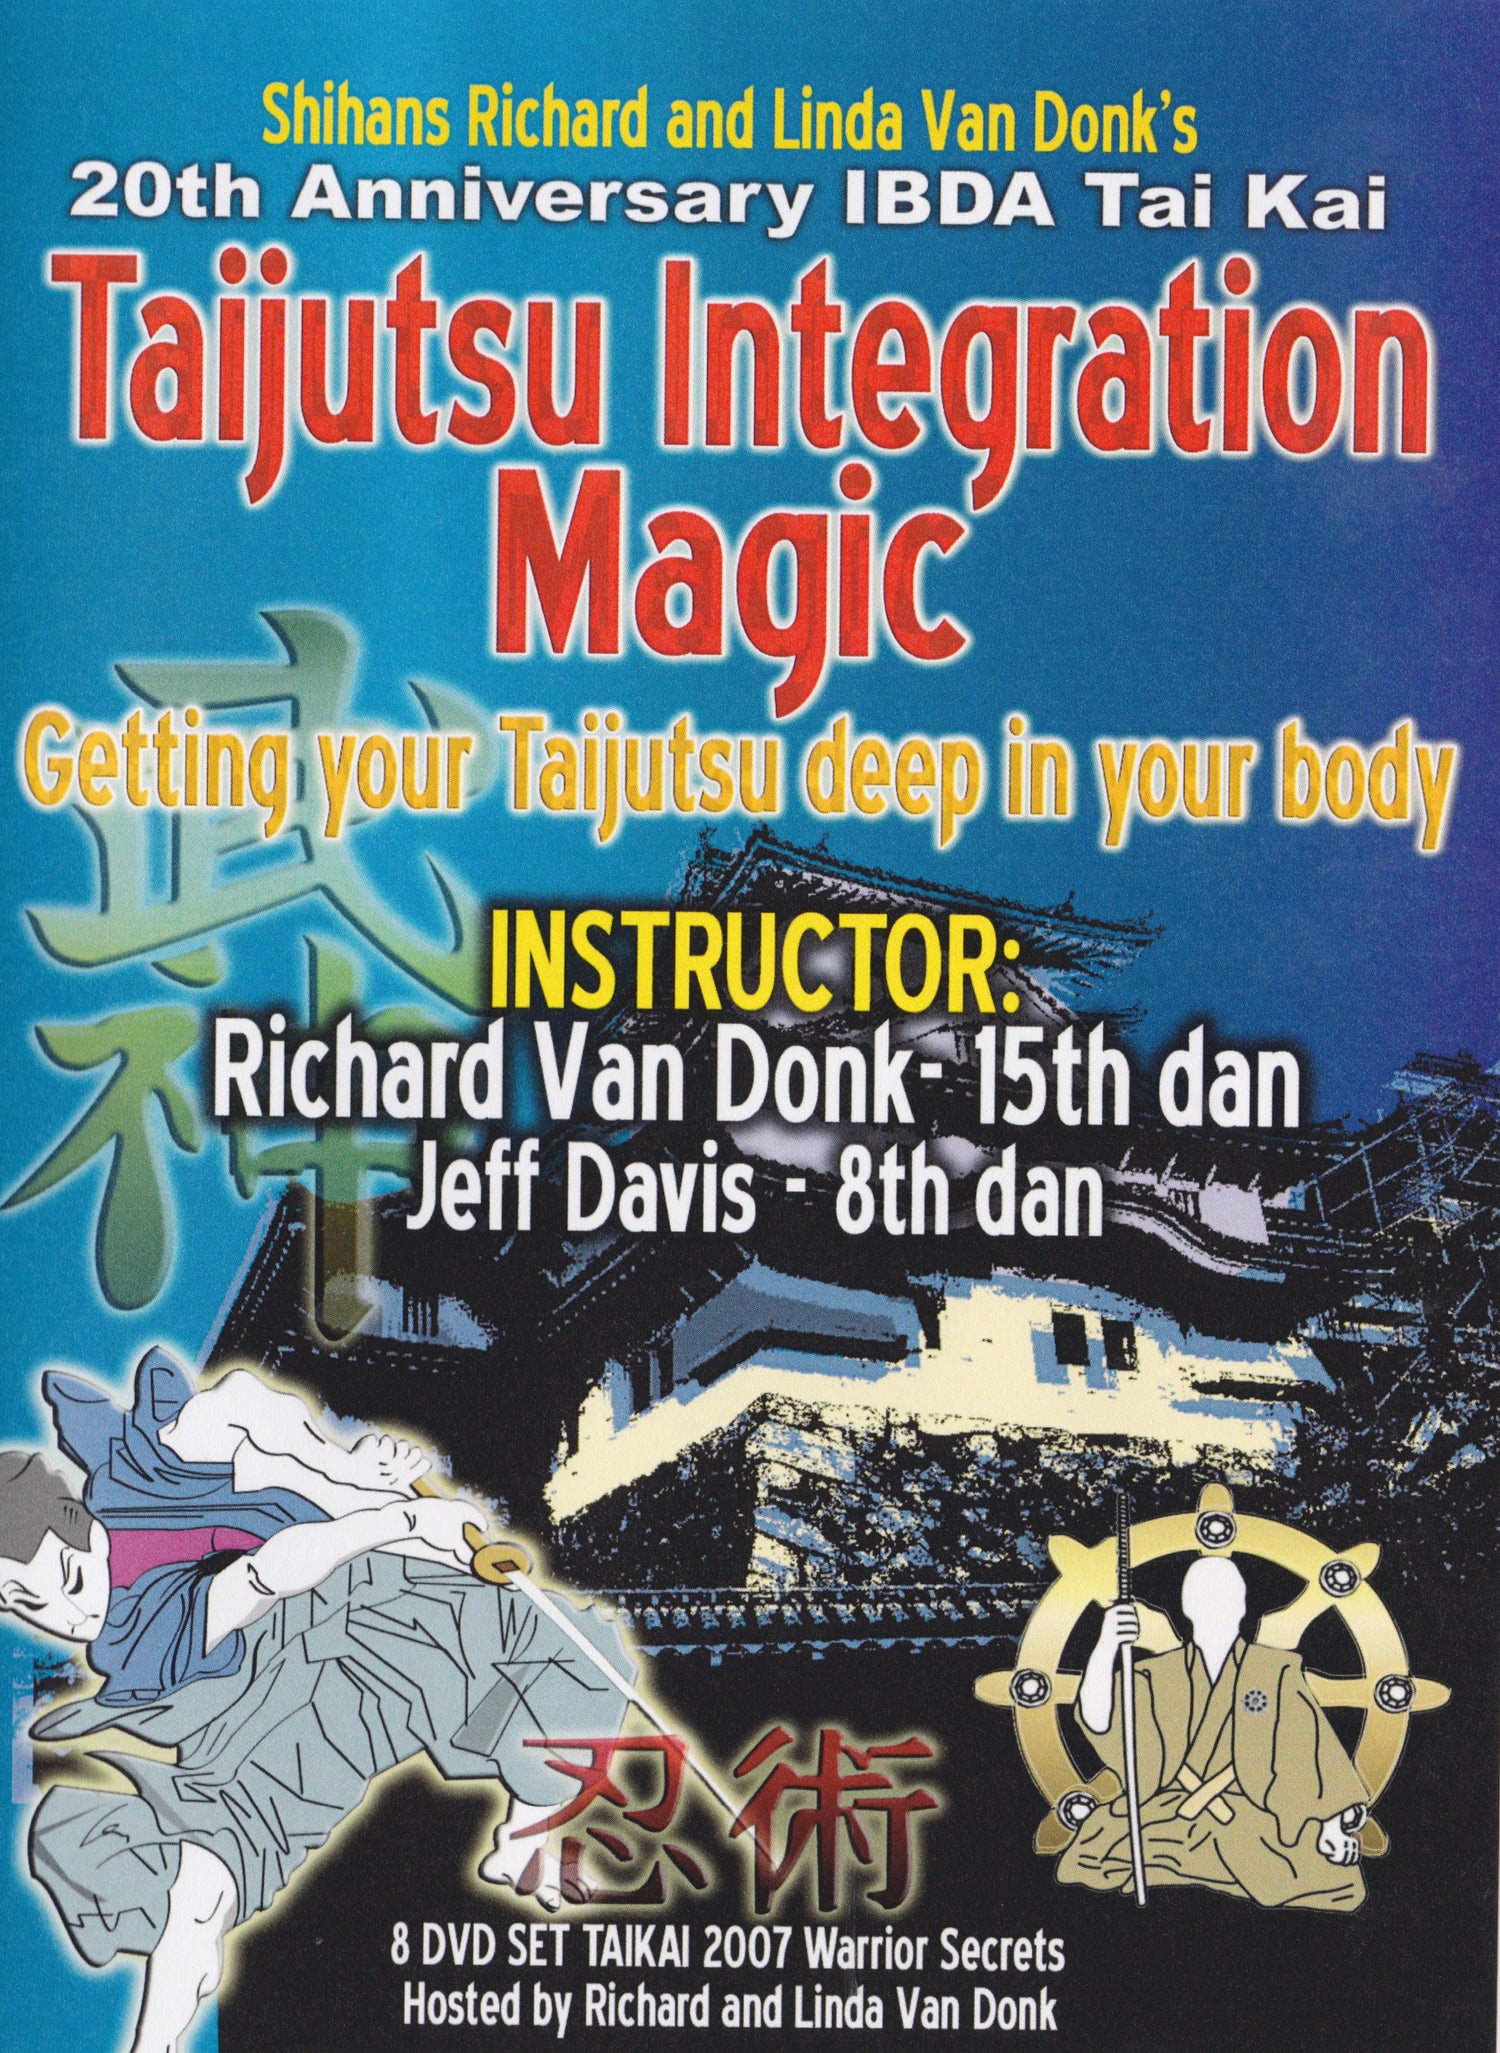 Taijutsu Integration Magic DVD by Richard Van Donk